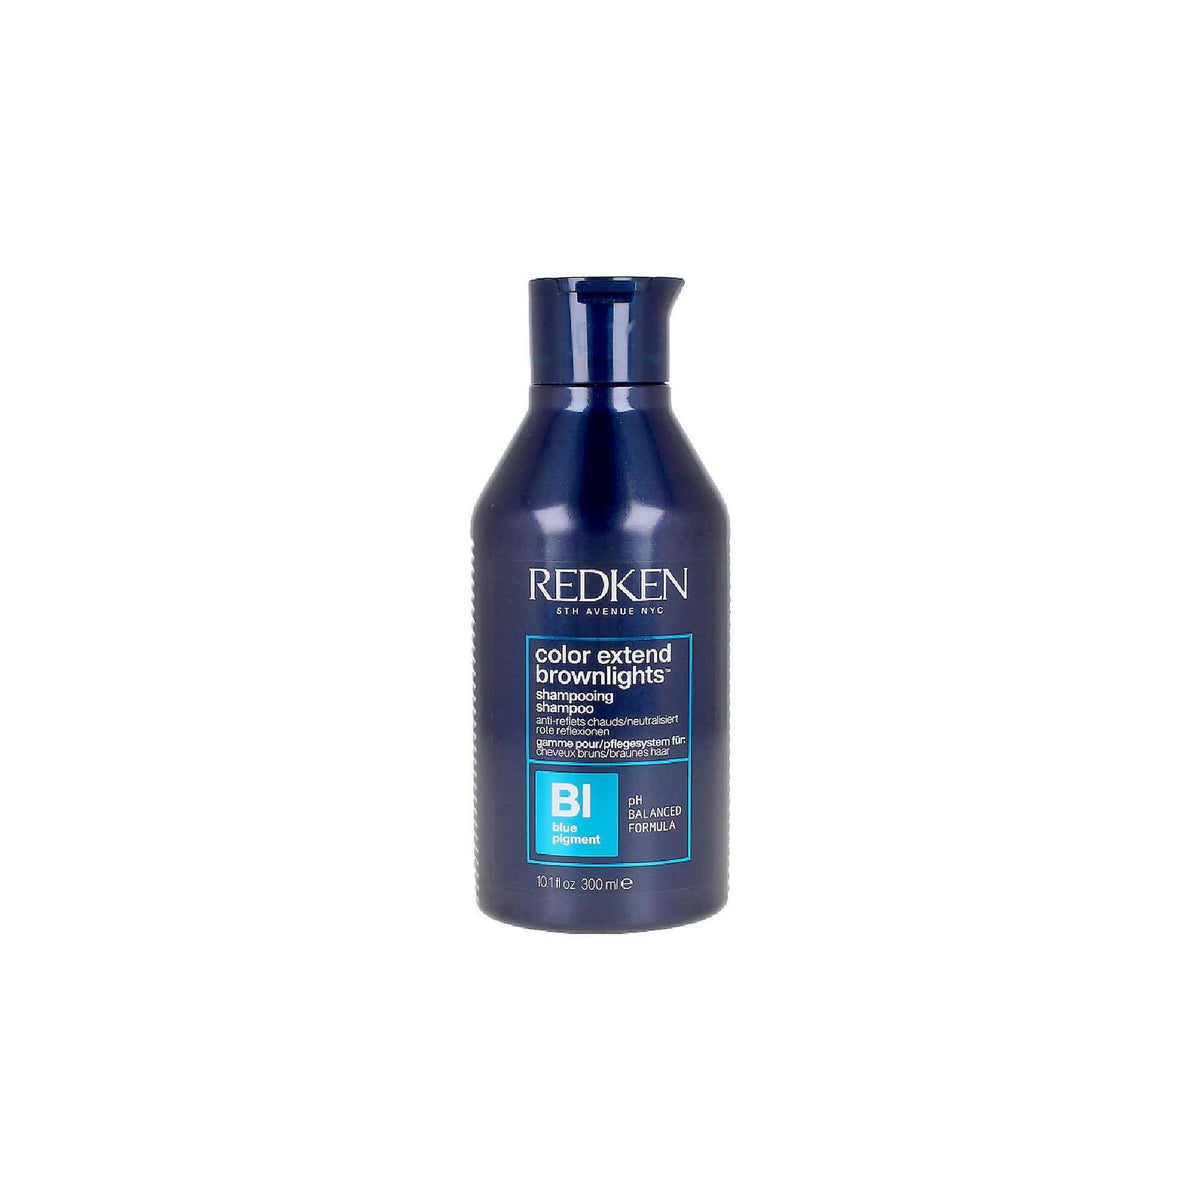 Redken Color Extend Brownlights Shampoo 300ml - Shop Online | Retail Box